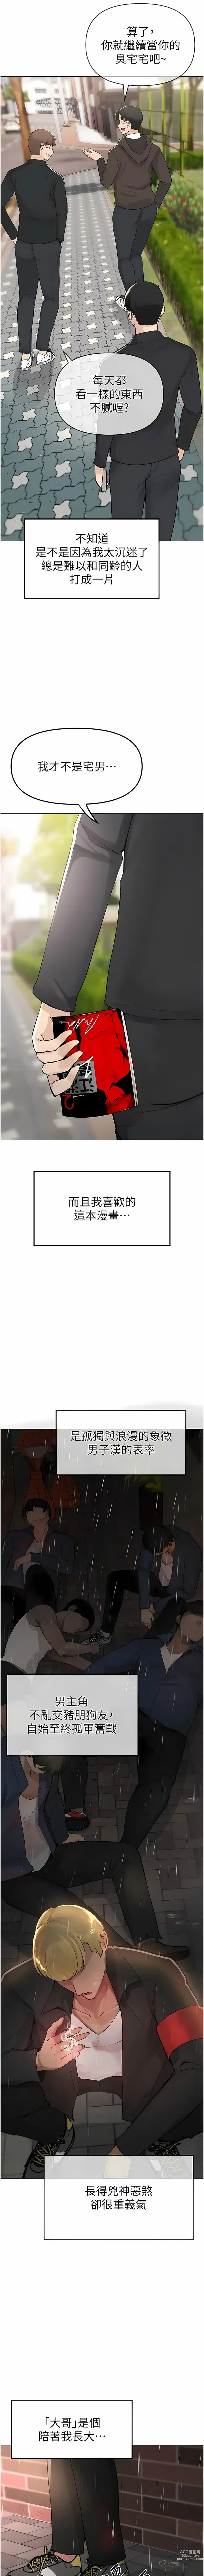 Page 6 of manga ↖㊣煞氣a猛男㊣↘ 1-37